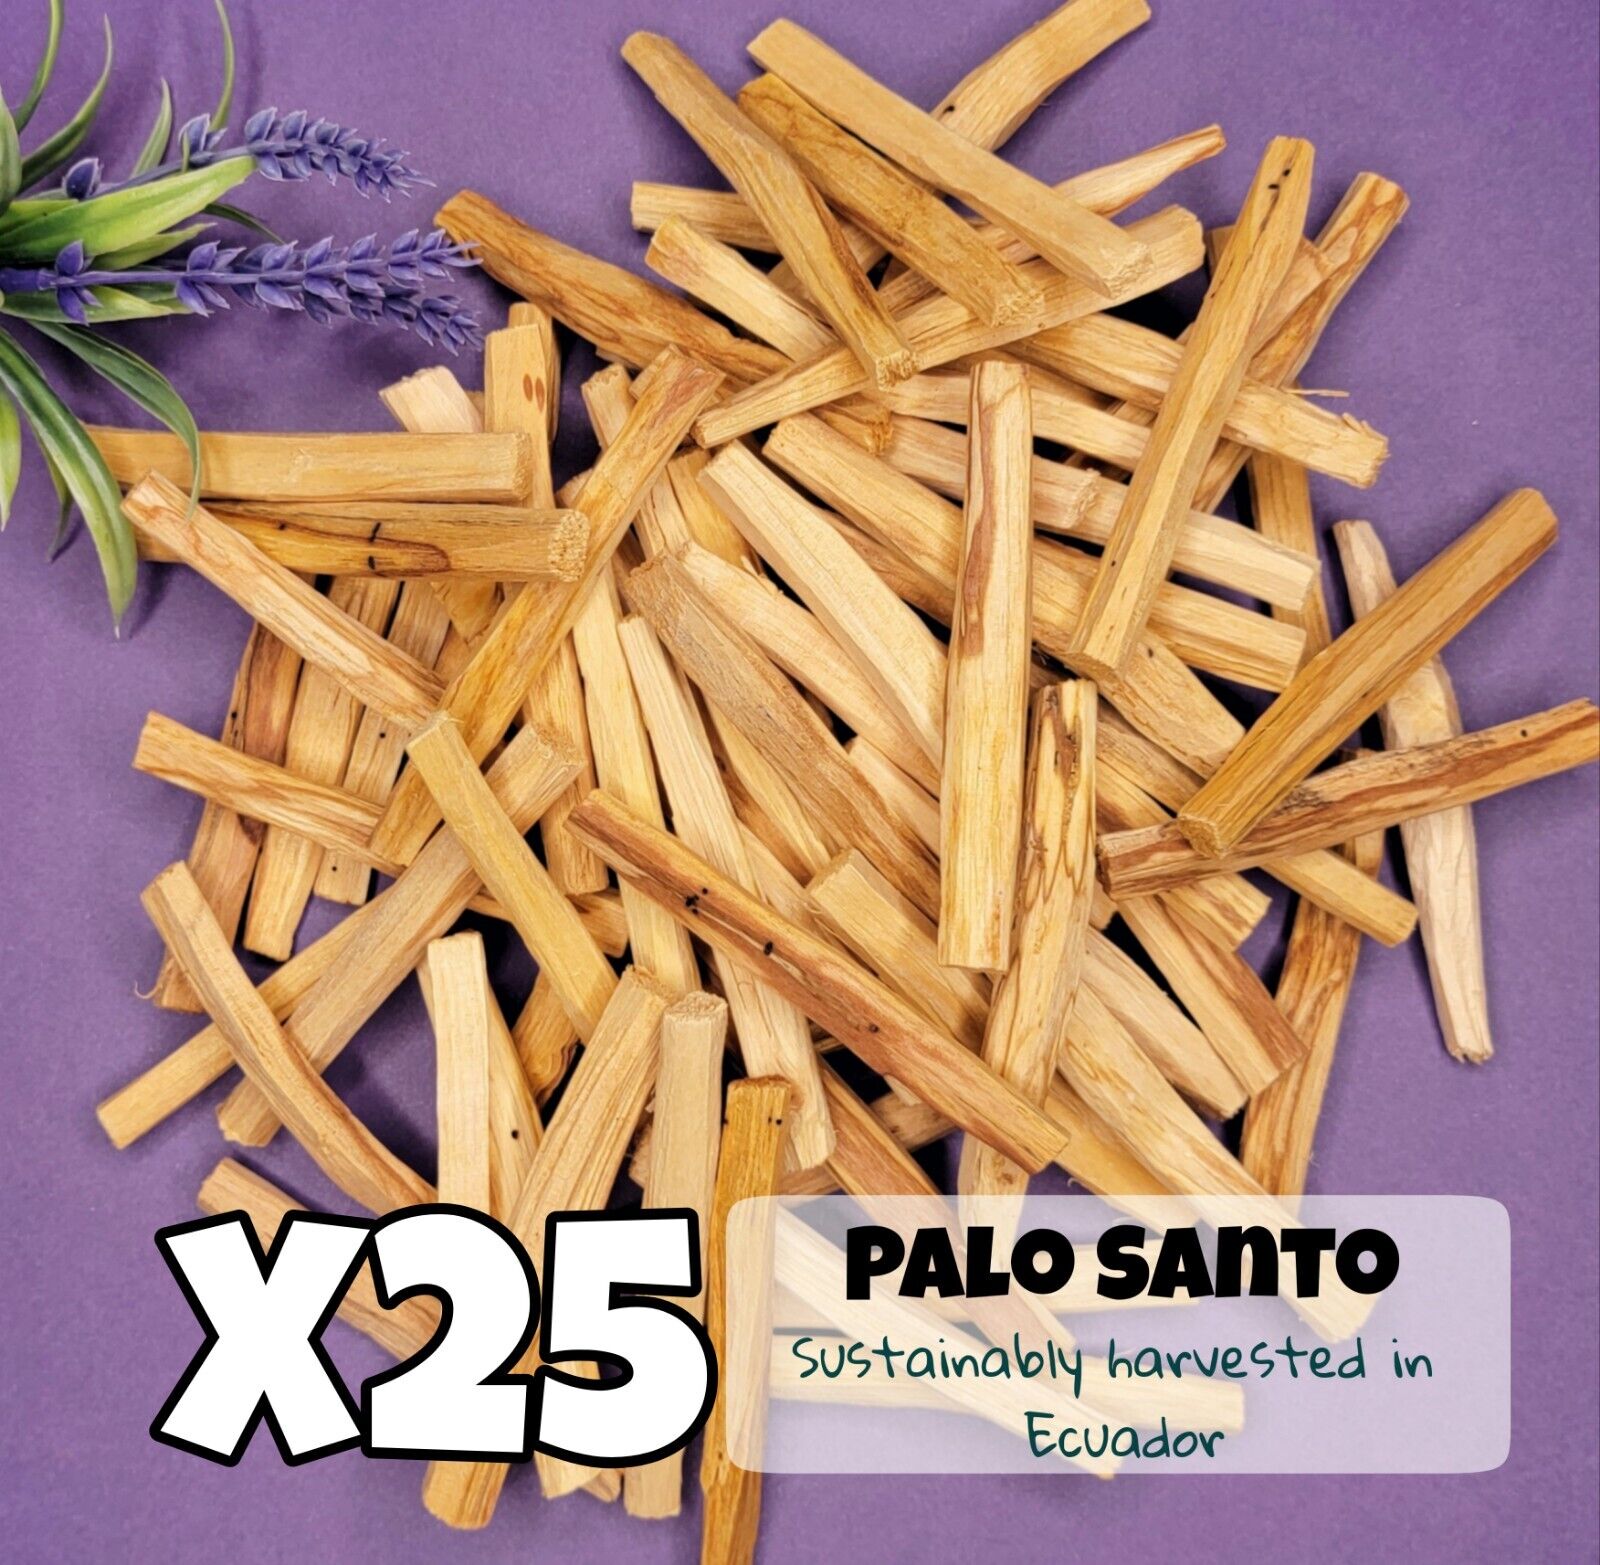 Wholesale 25 Premium Palo Santo smuding STICKS. Holy stick WOOD INCENSE 